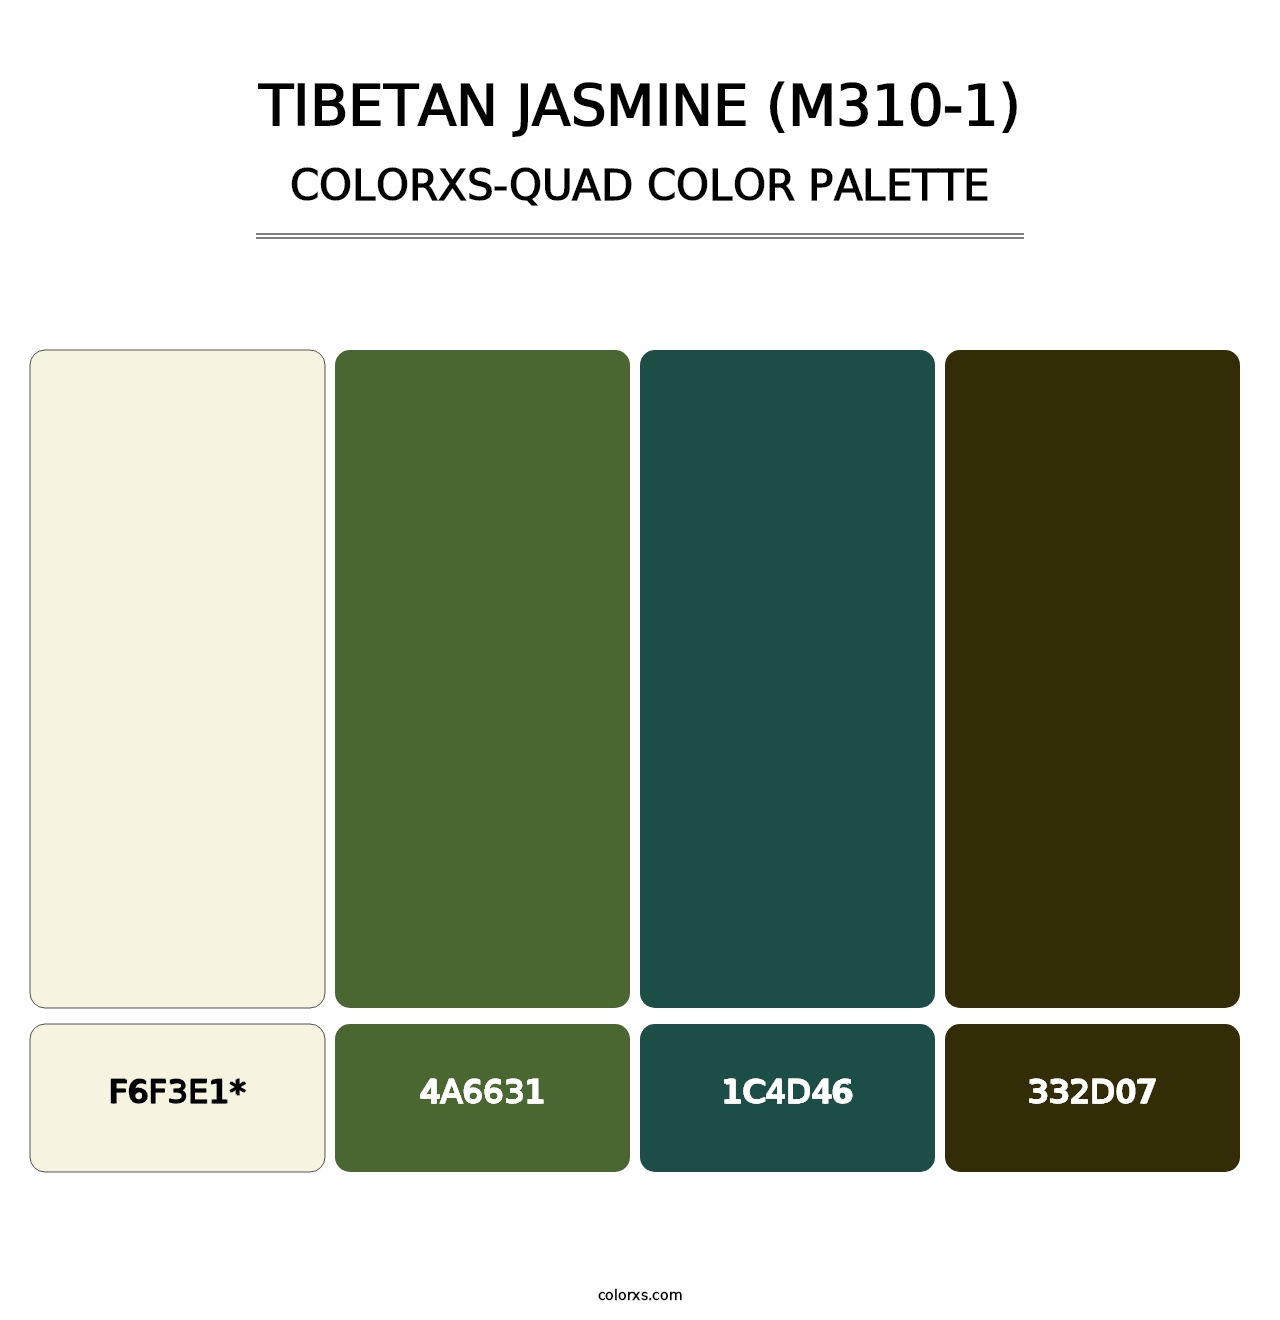 Tibetan Jasmine (M310-1) - Colorxs Quad Palette